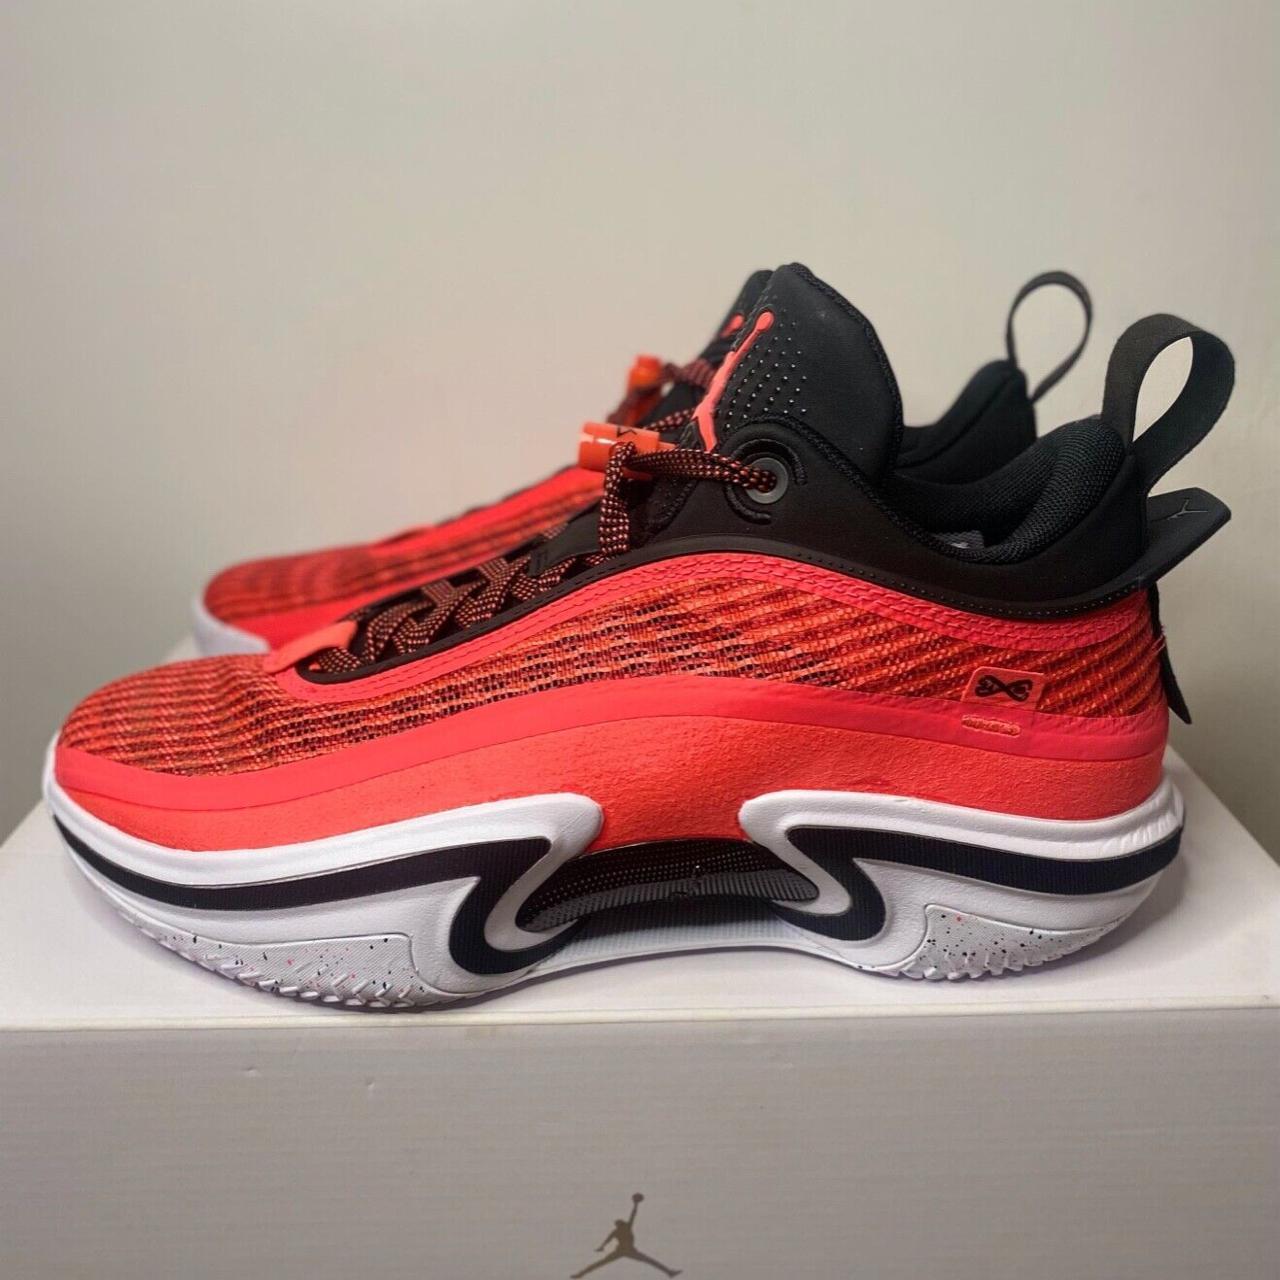 Nike Air Jordan XXXVI Low Men's Basketball Shoes - DH0833-660 - Red